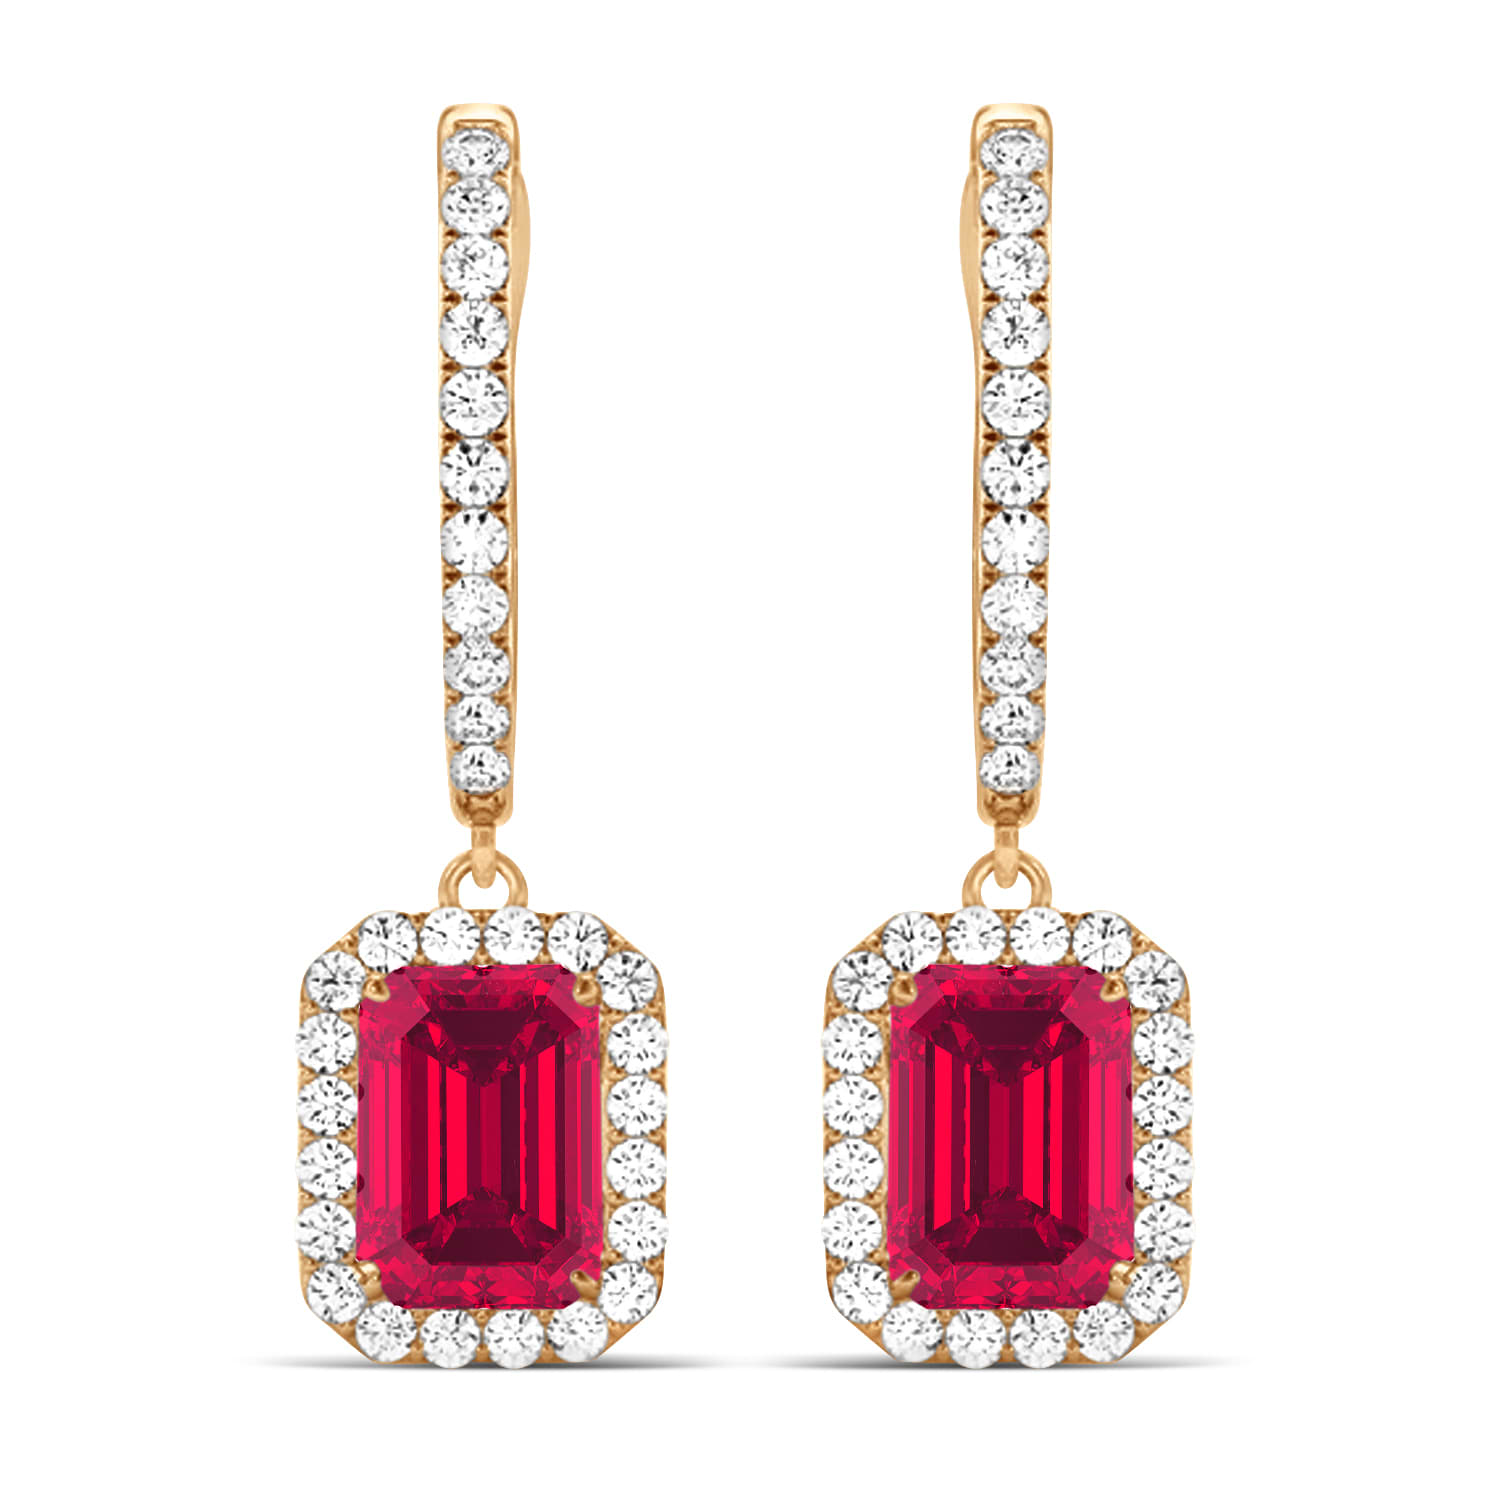 Emerald Shape Ruby & Diamond Halo Dangling Earrings 14k Rose Gold (1.90ct)